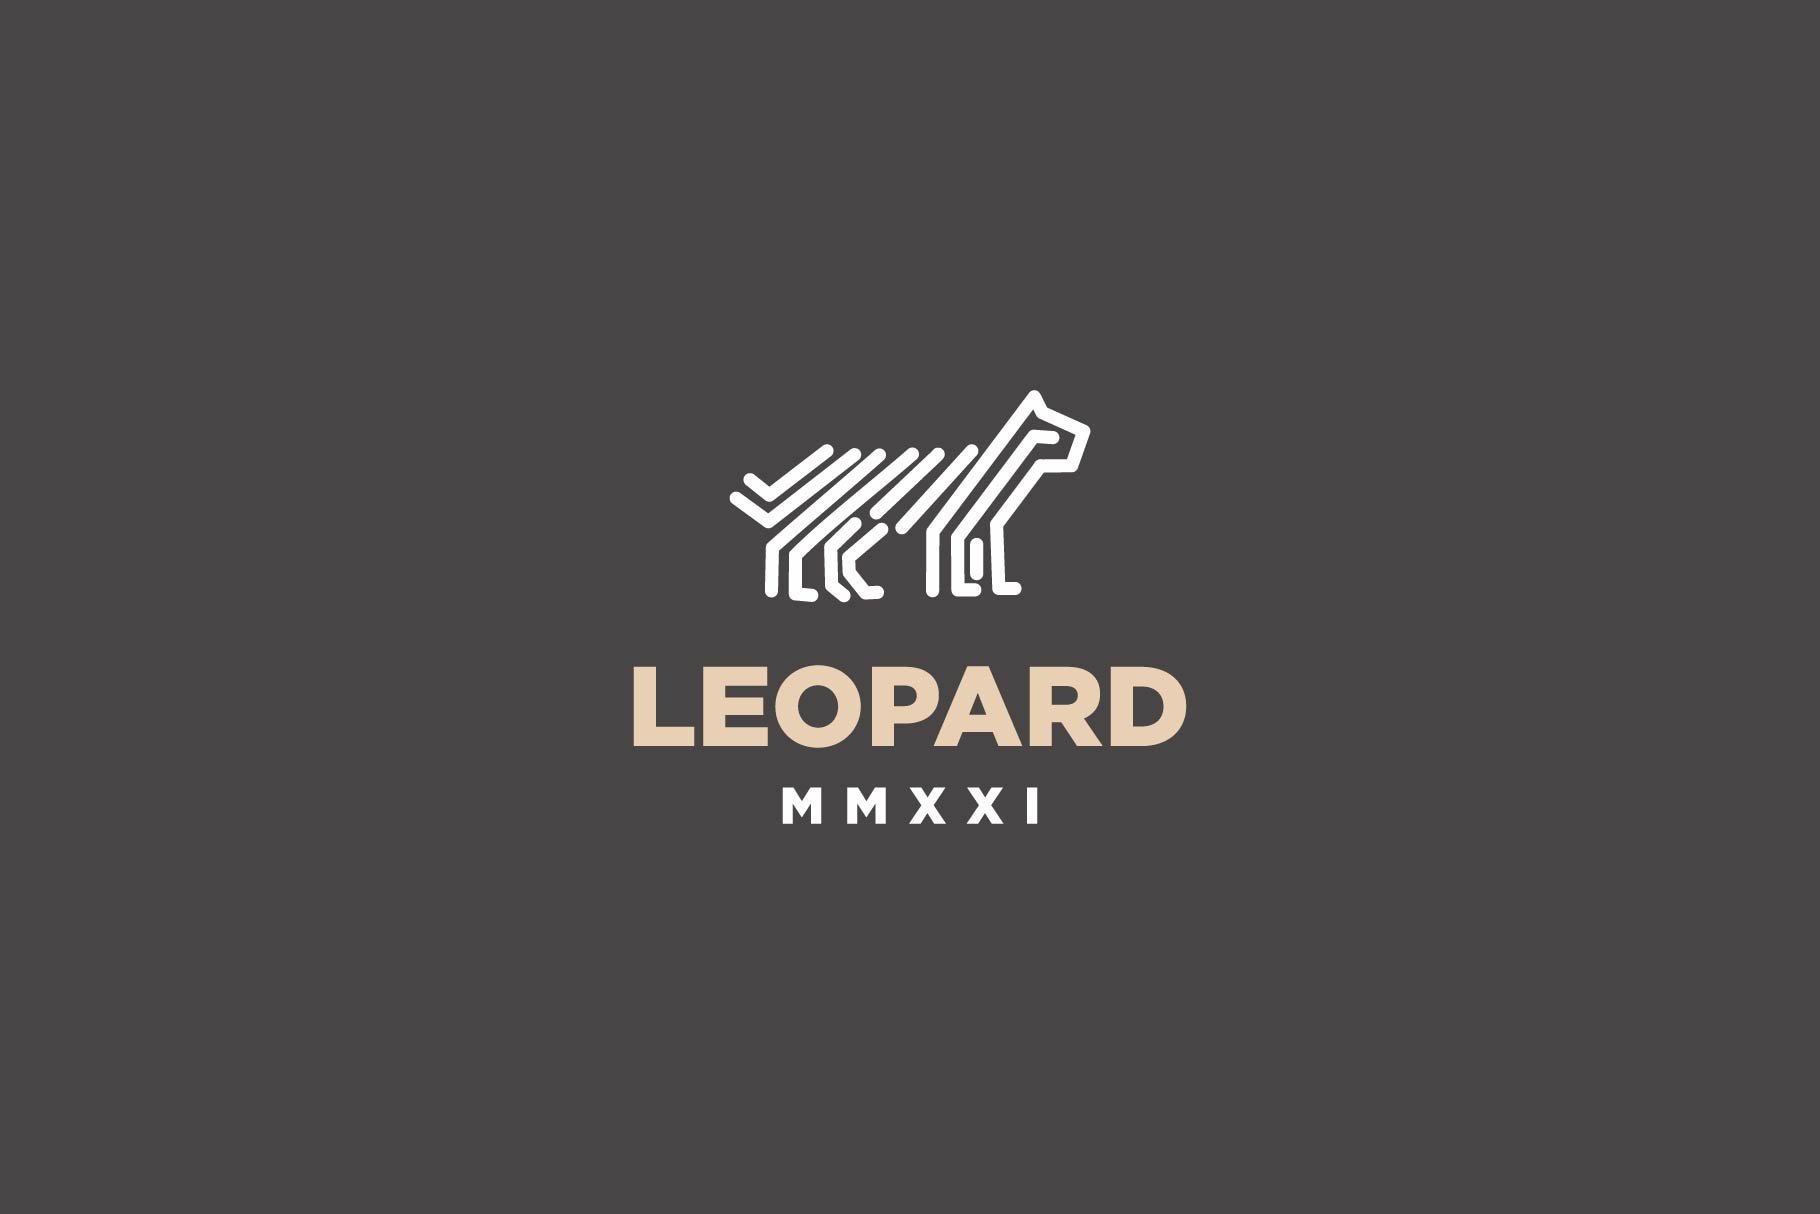 leopard line logo cover image.